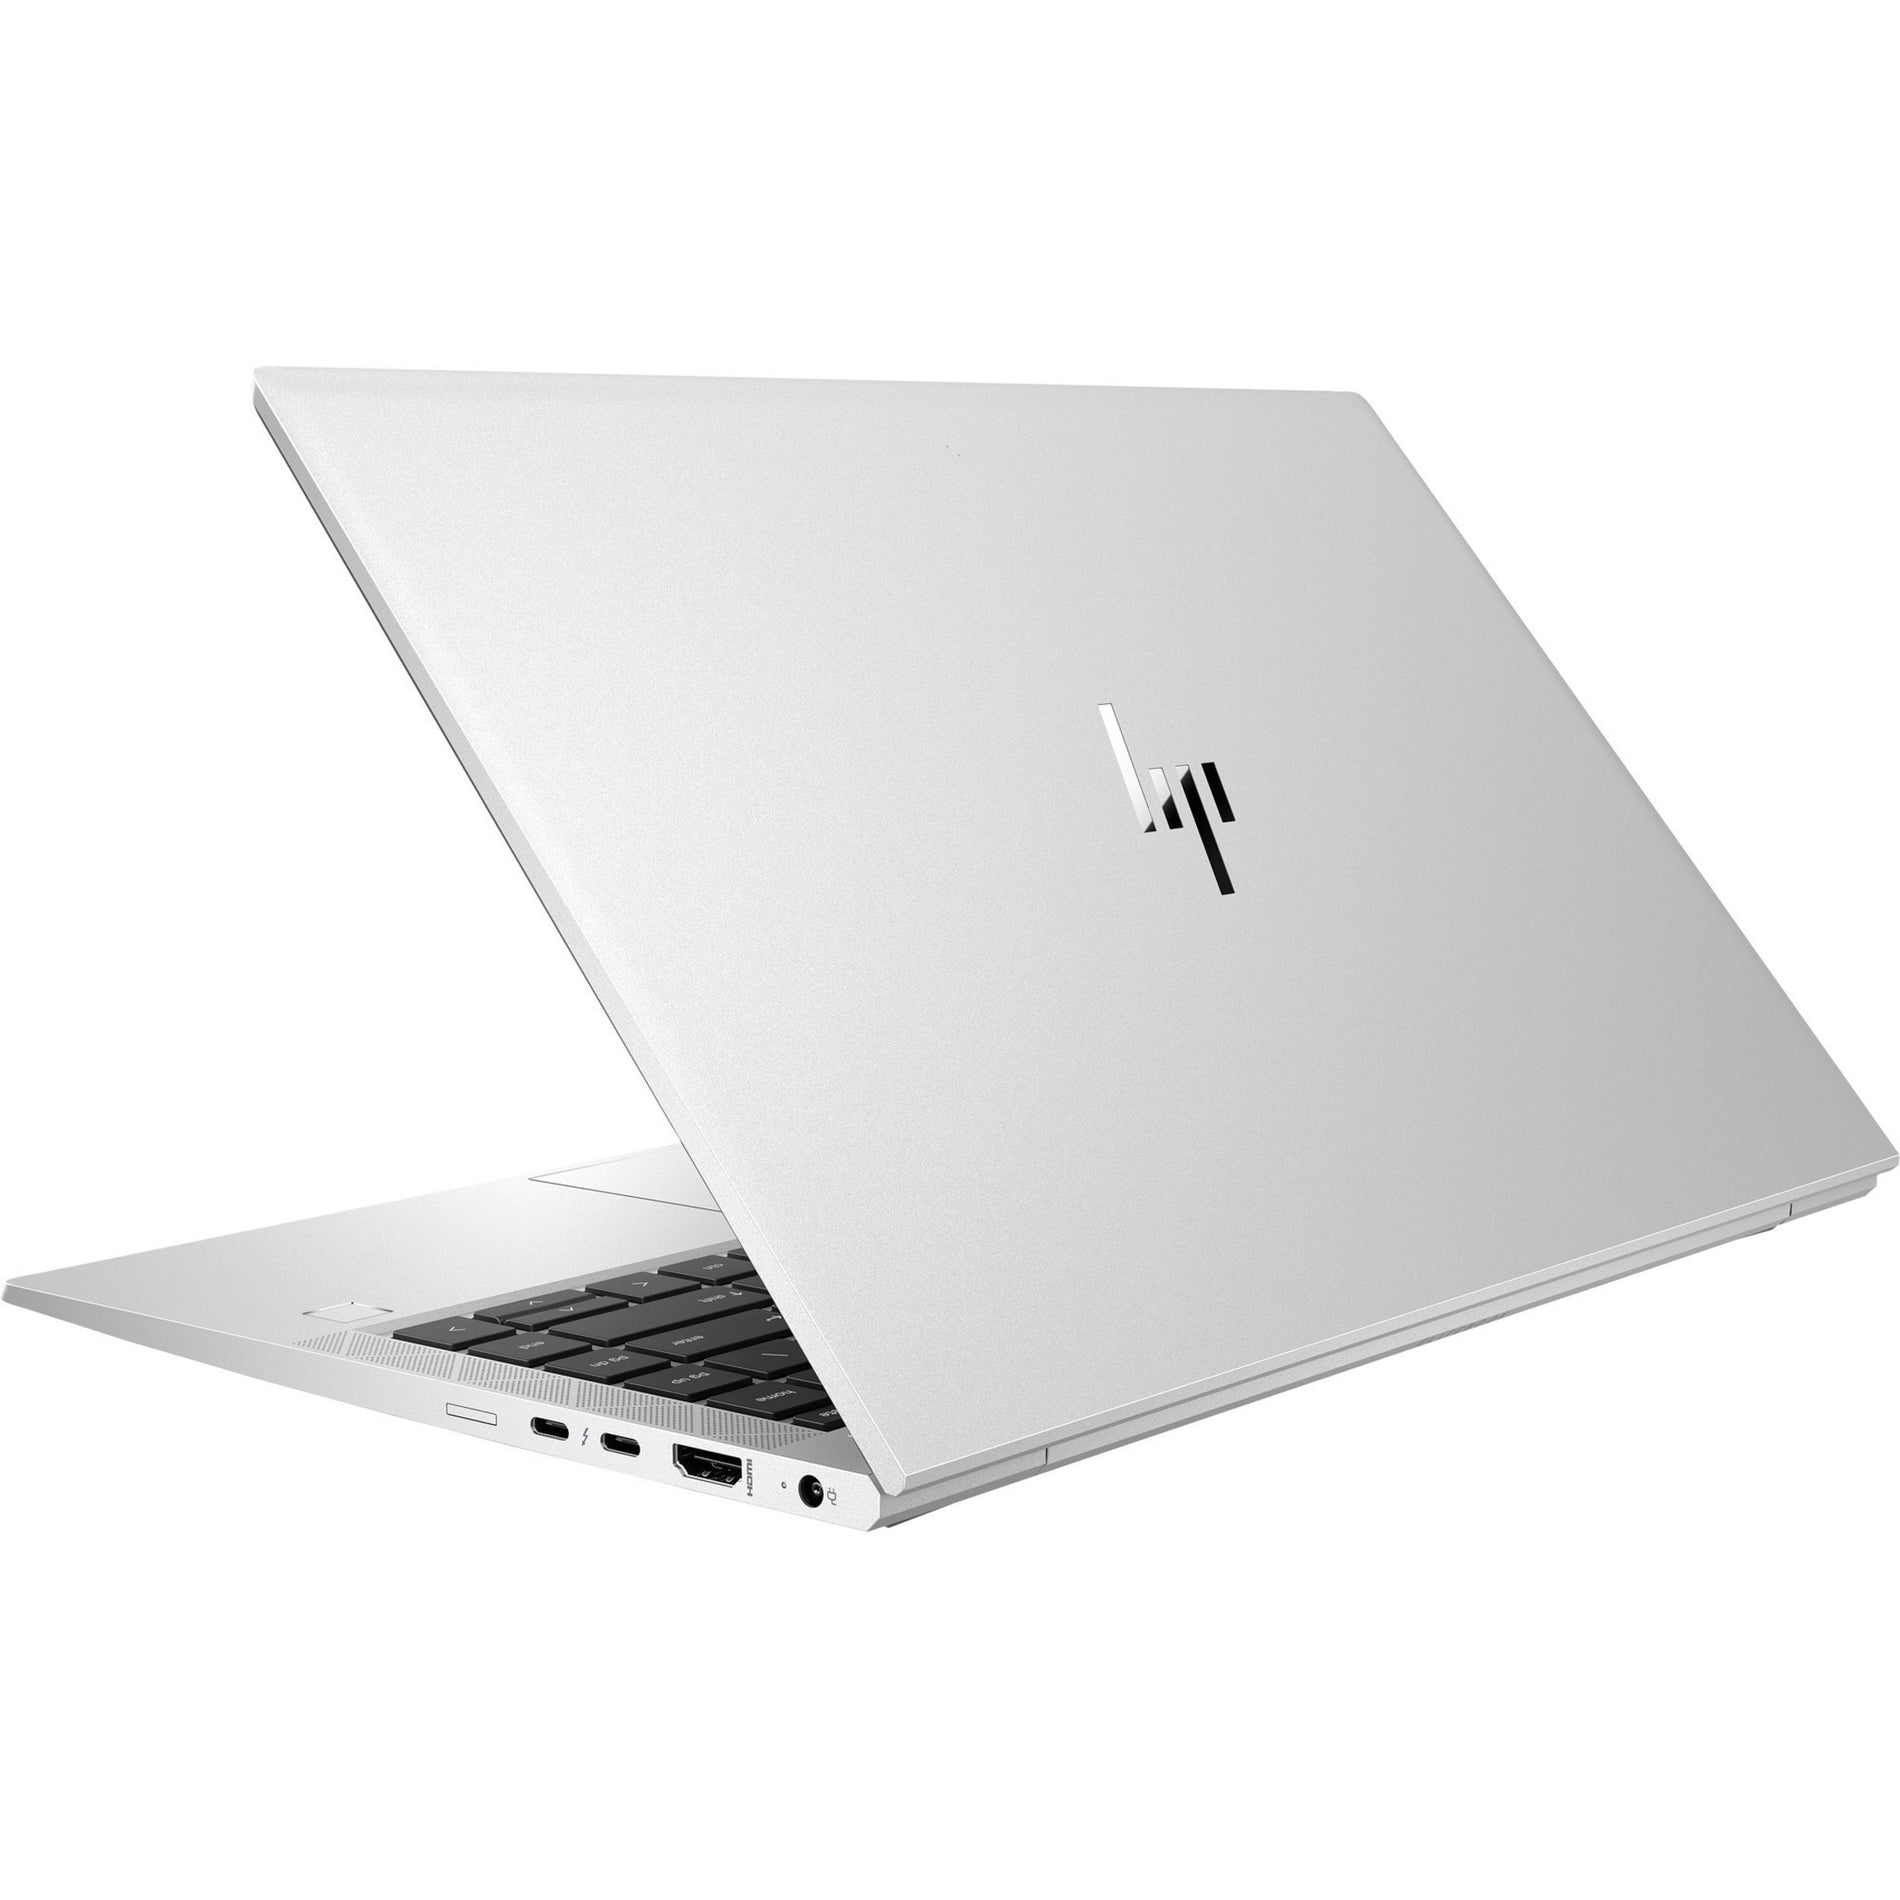 HP EliteBook 840 G8 Notebook PC, 14" Intel Core i7, 8GB RAM, 512GB SSD, Windows 10